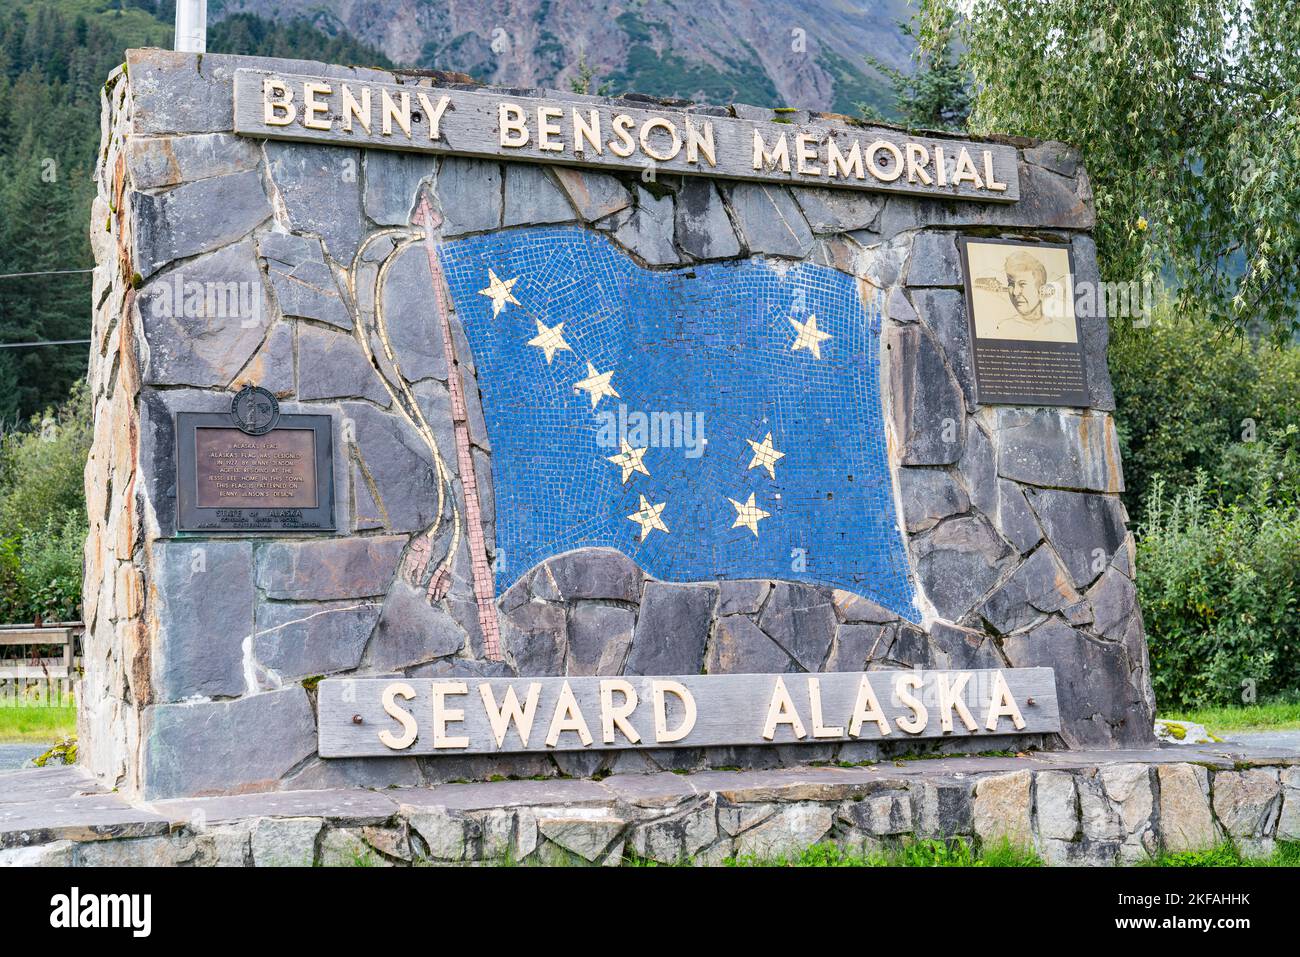 Seward, AK - 1. September 2022: Das Benny Benson Memorial erinnert an Benny Benson, der 1927 den Wettbewerb zur Gestaltung der Alaska State Flag gewonnen hat Stockfoto